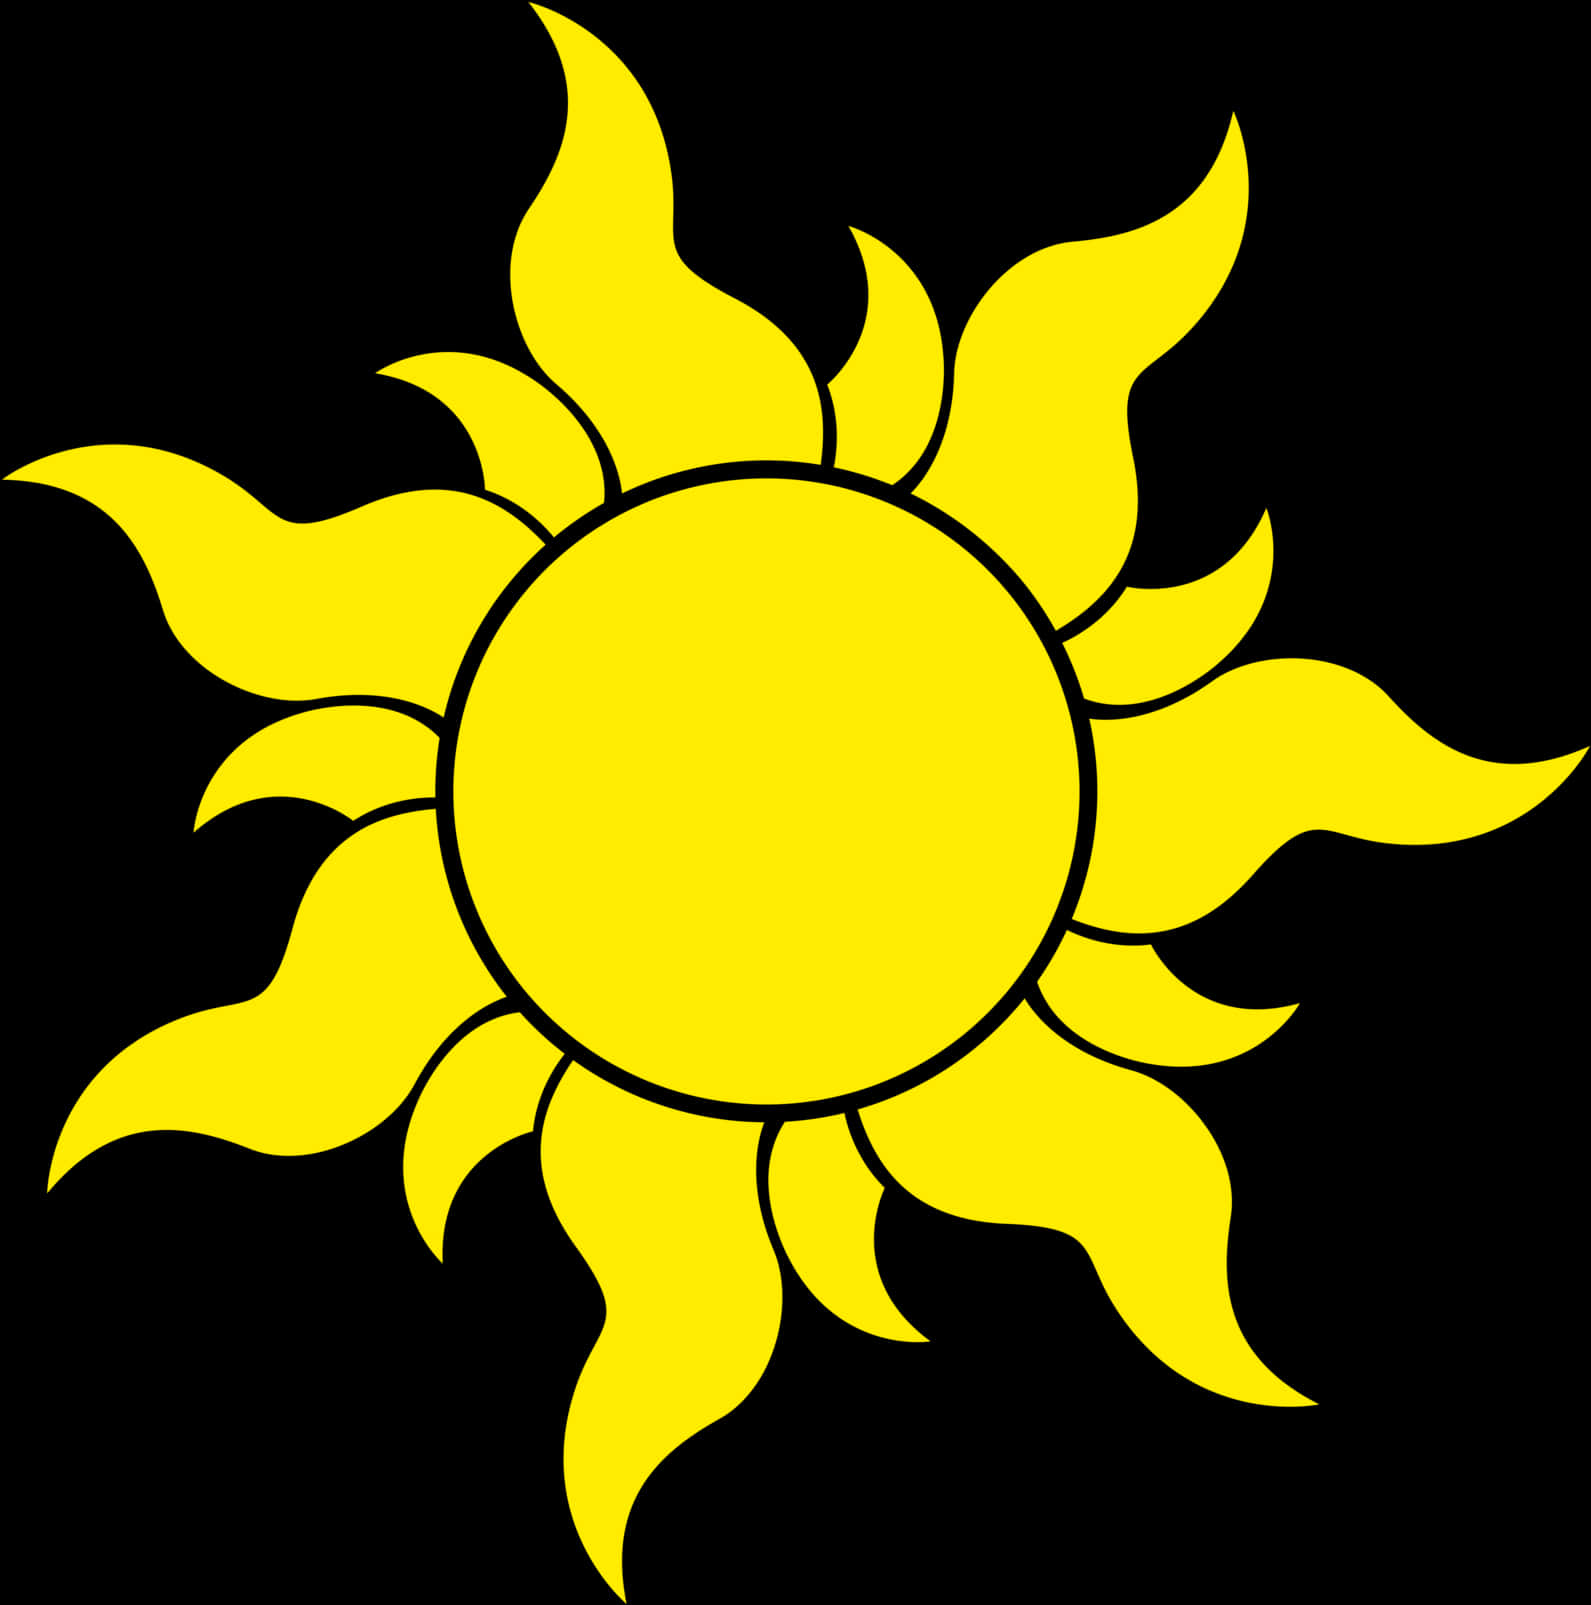 Yellow Sun Graphic Transparent Background